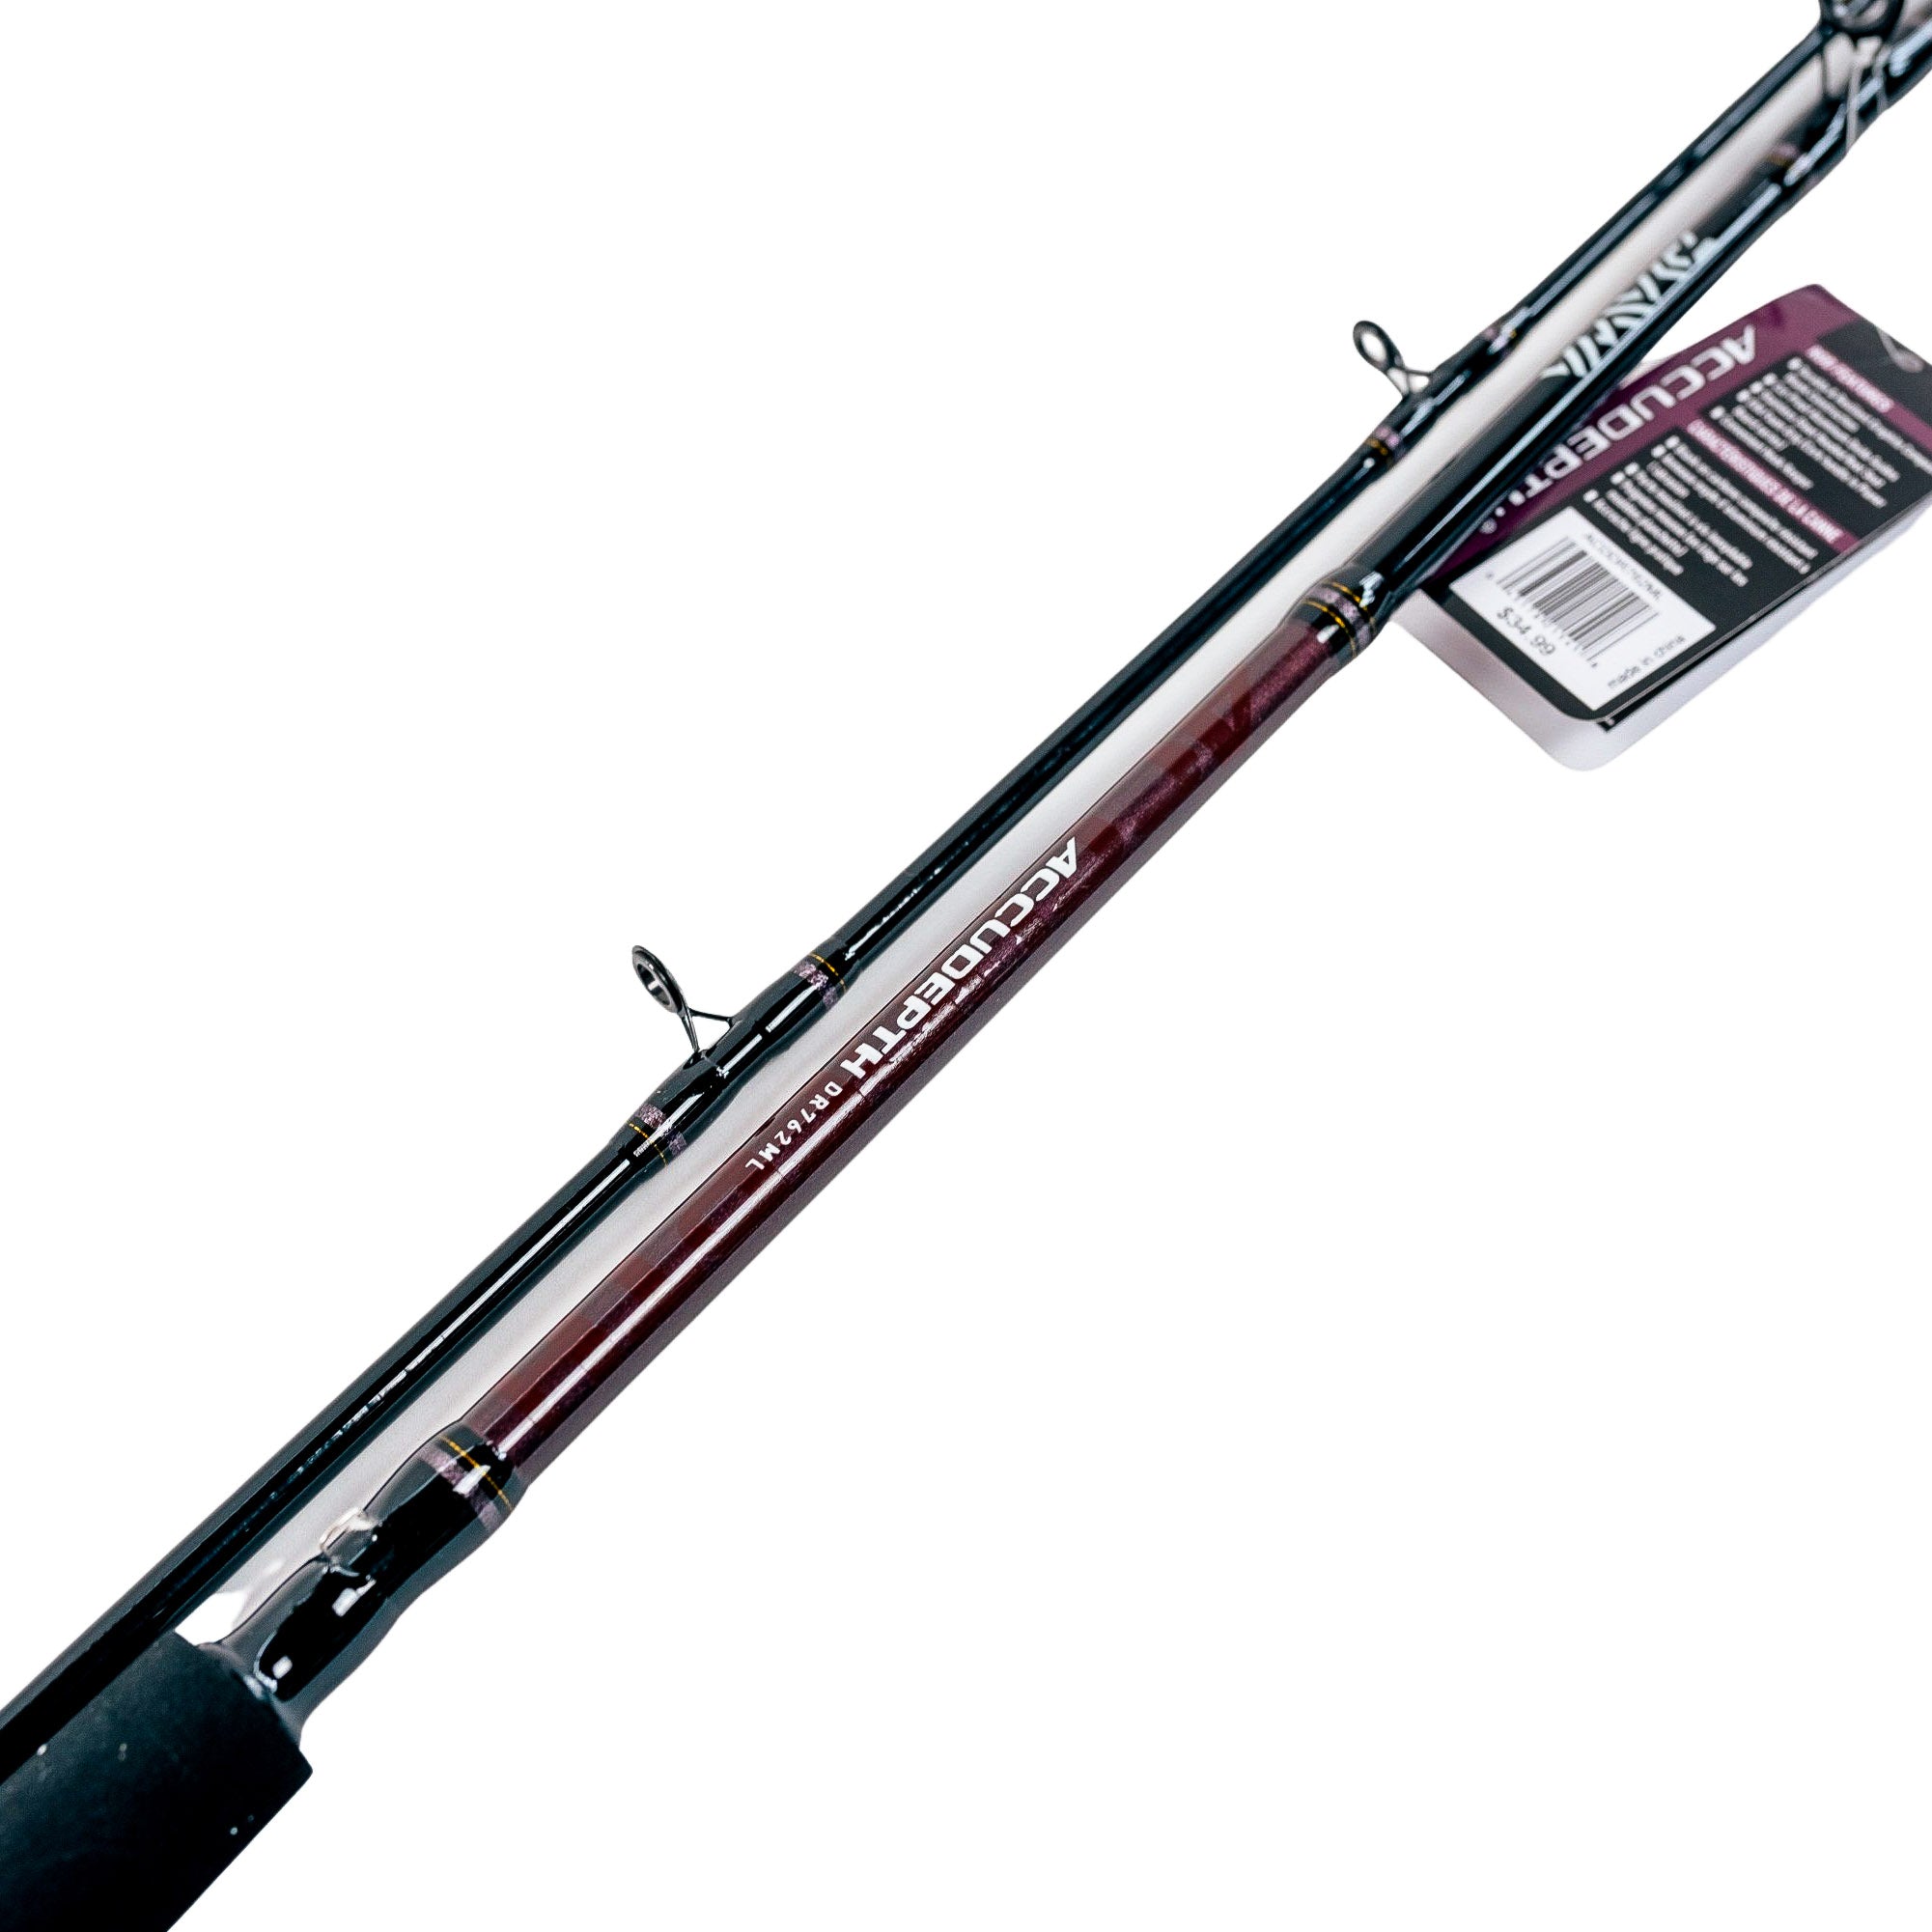 Caña Daiwa Accudepth Downrigger Rod 2,29m 10-20lb – A la pesca